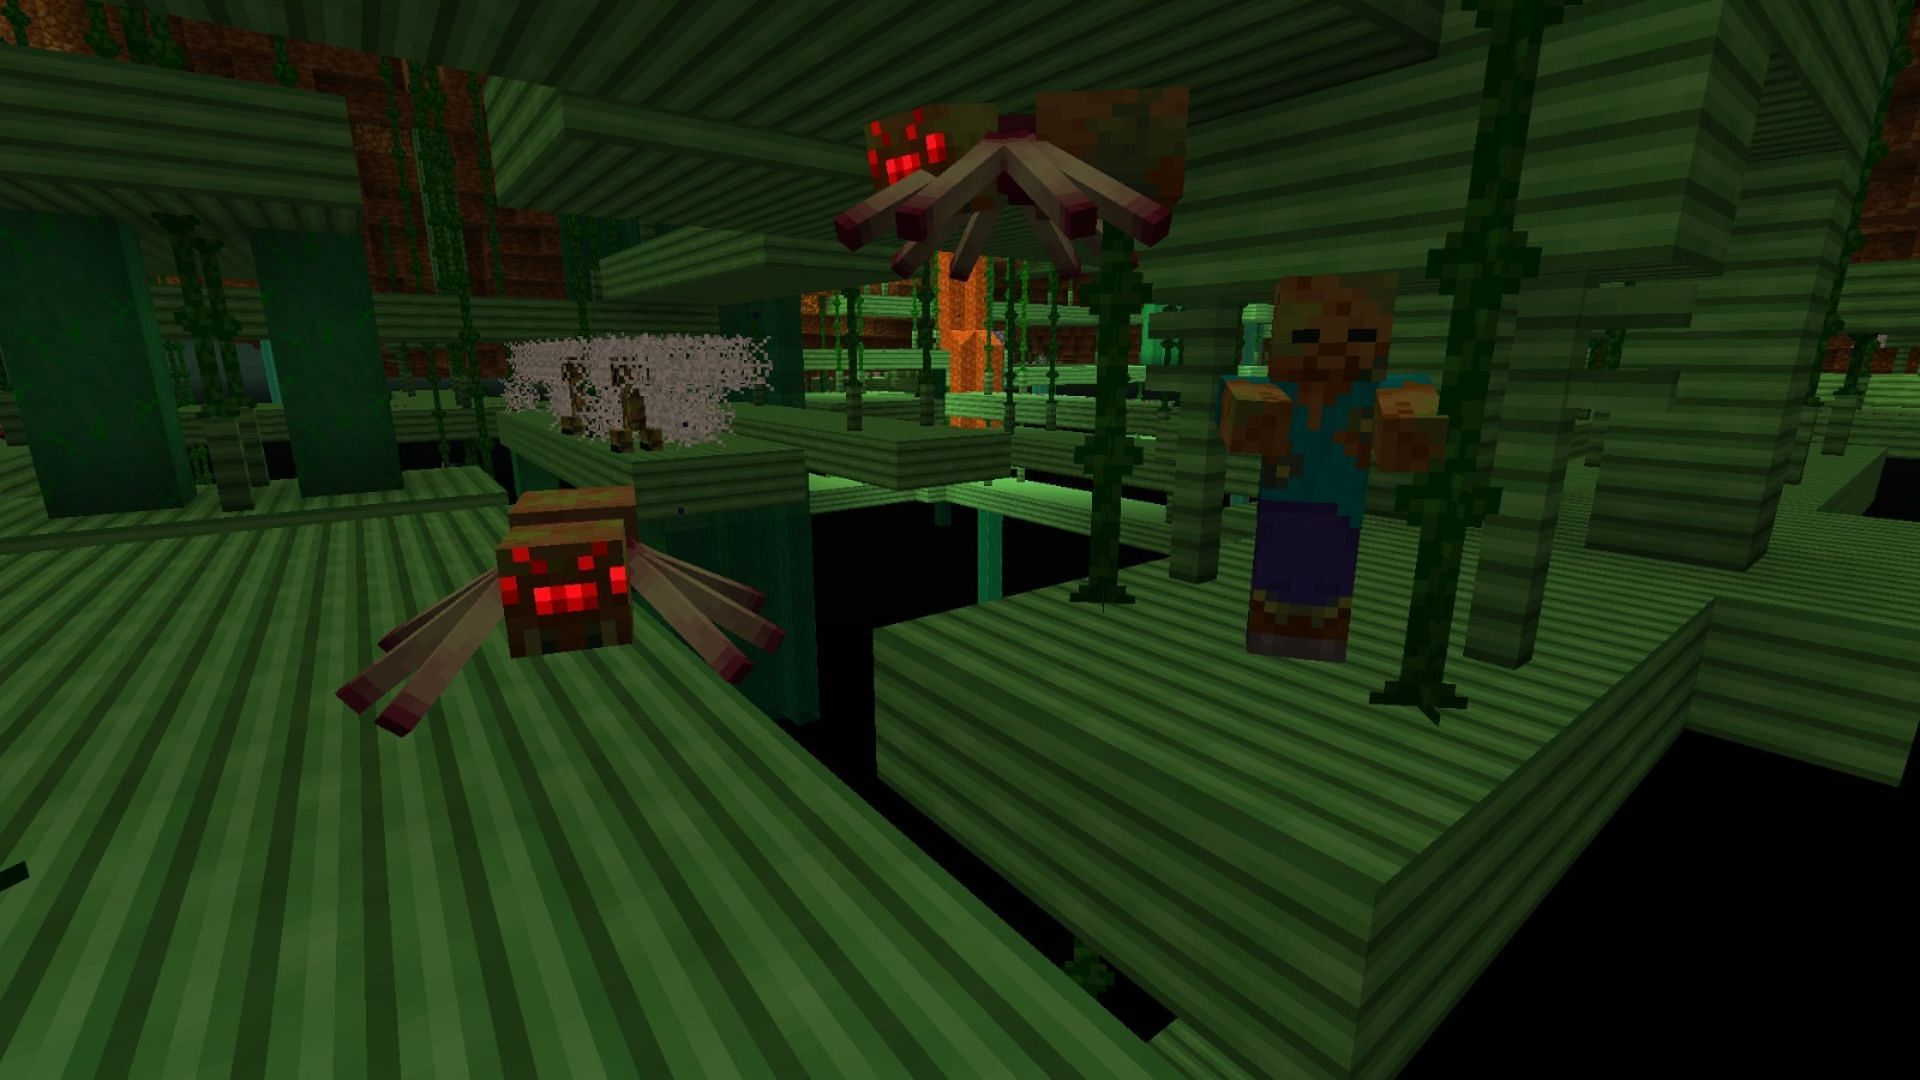 The potato mobs in Minecraft (image via Mojang Studios)